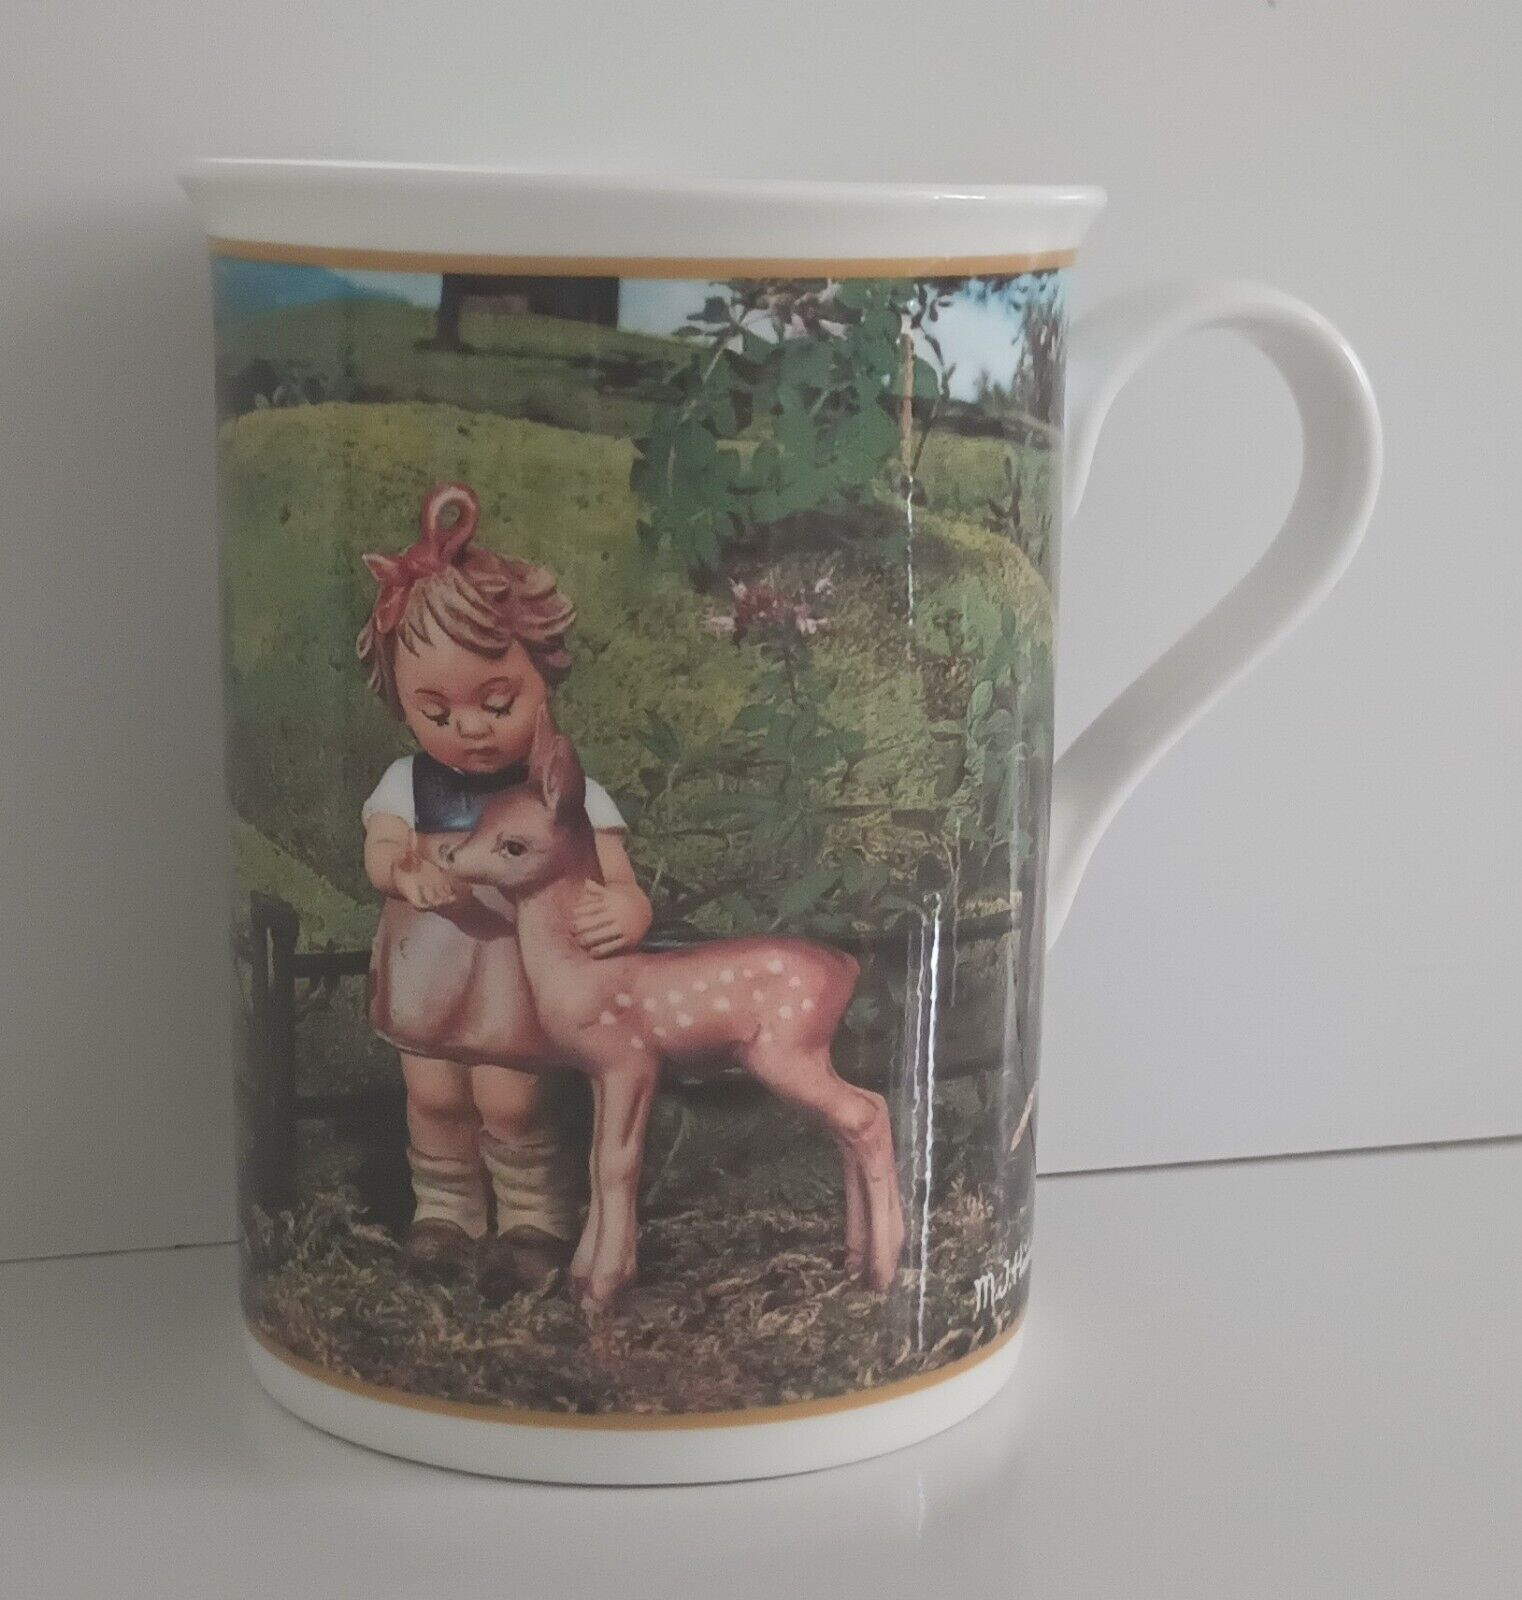 April Hummel Mug Cup 10 Oz Playmates Danbury Mint Fine Porcelain Collectors